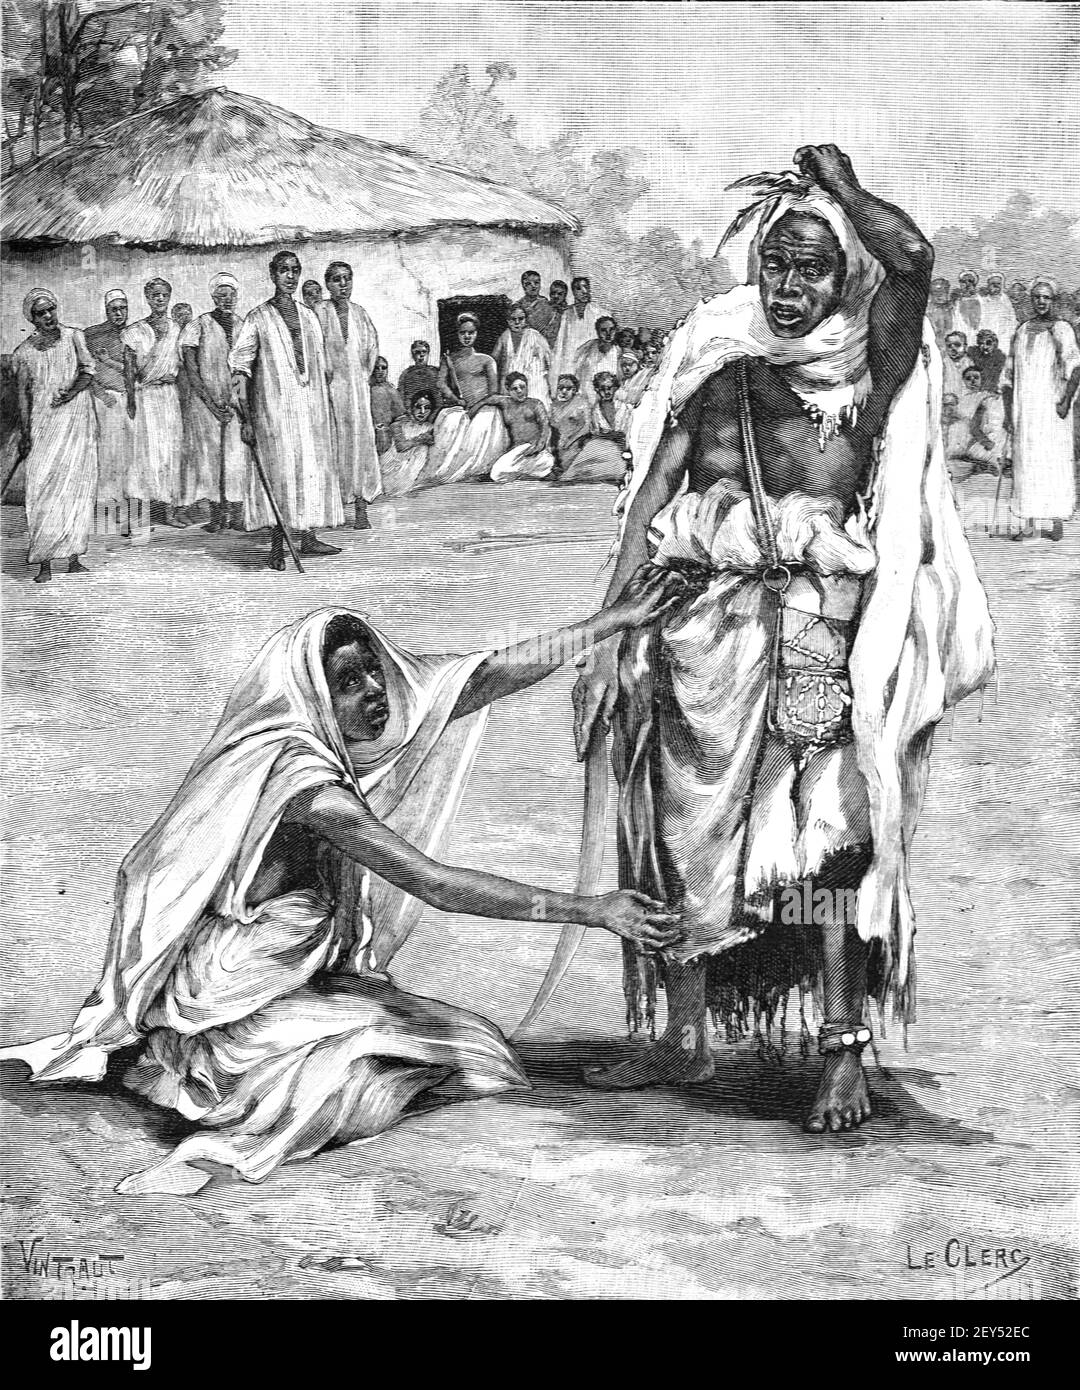 African Village Showing Respect to Village Witch Doctor or Medicine Man Senegal Africa 1896 Vintage Illustration or Old Engraving Stock Photo